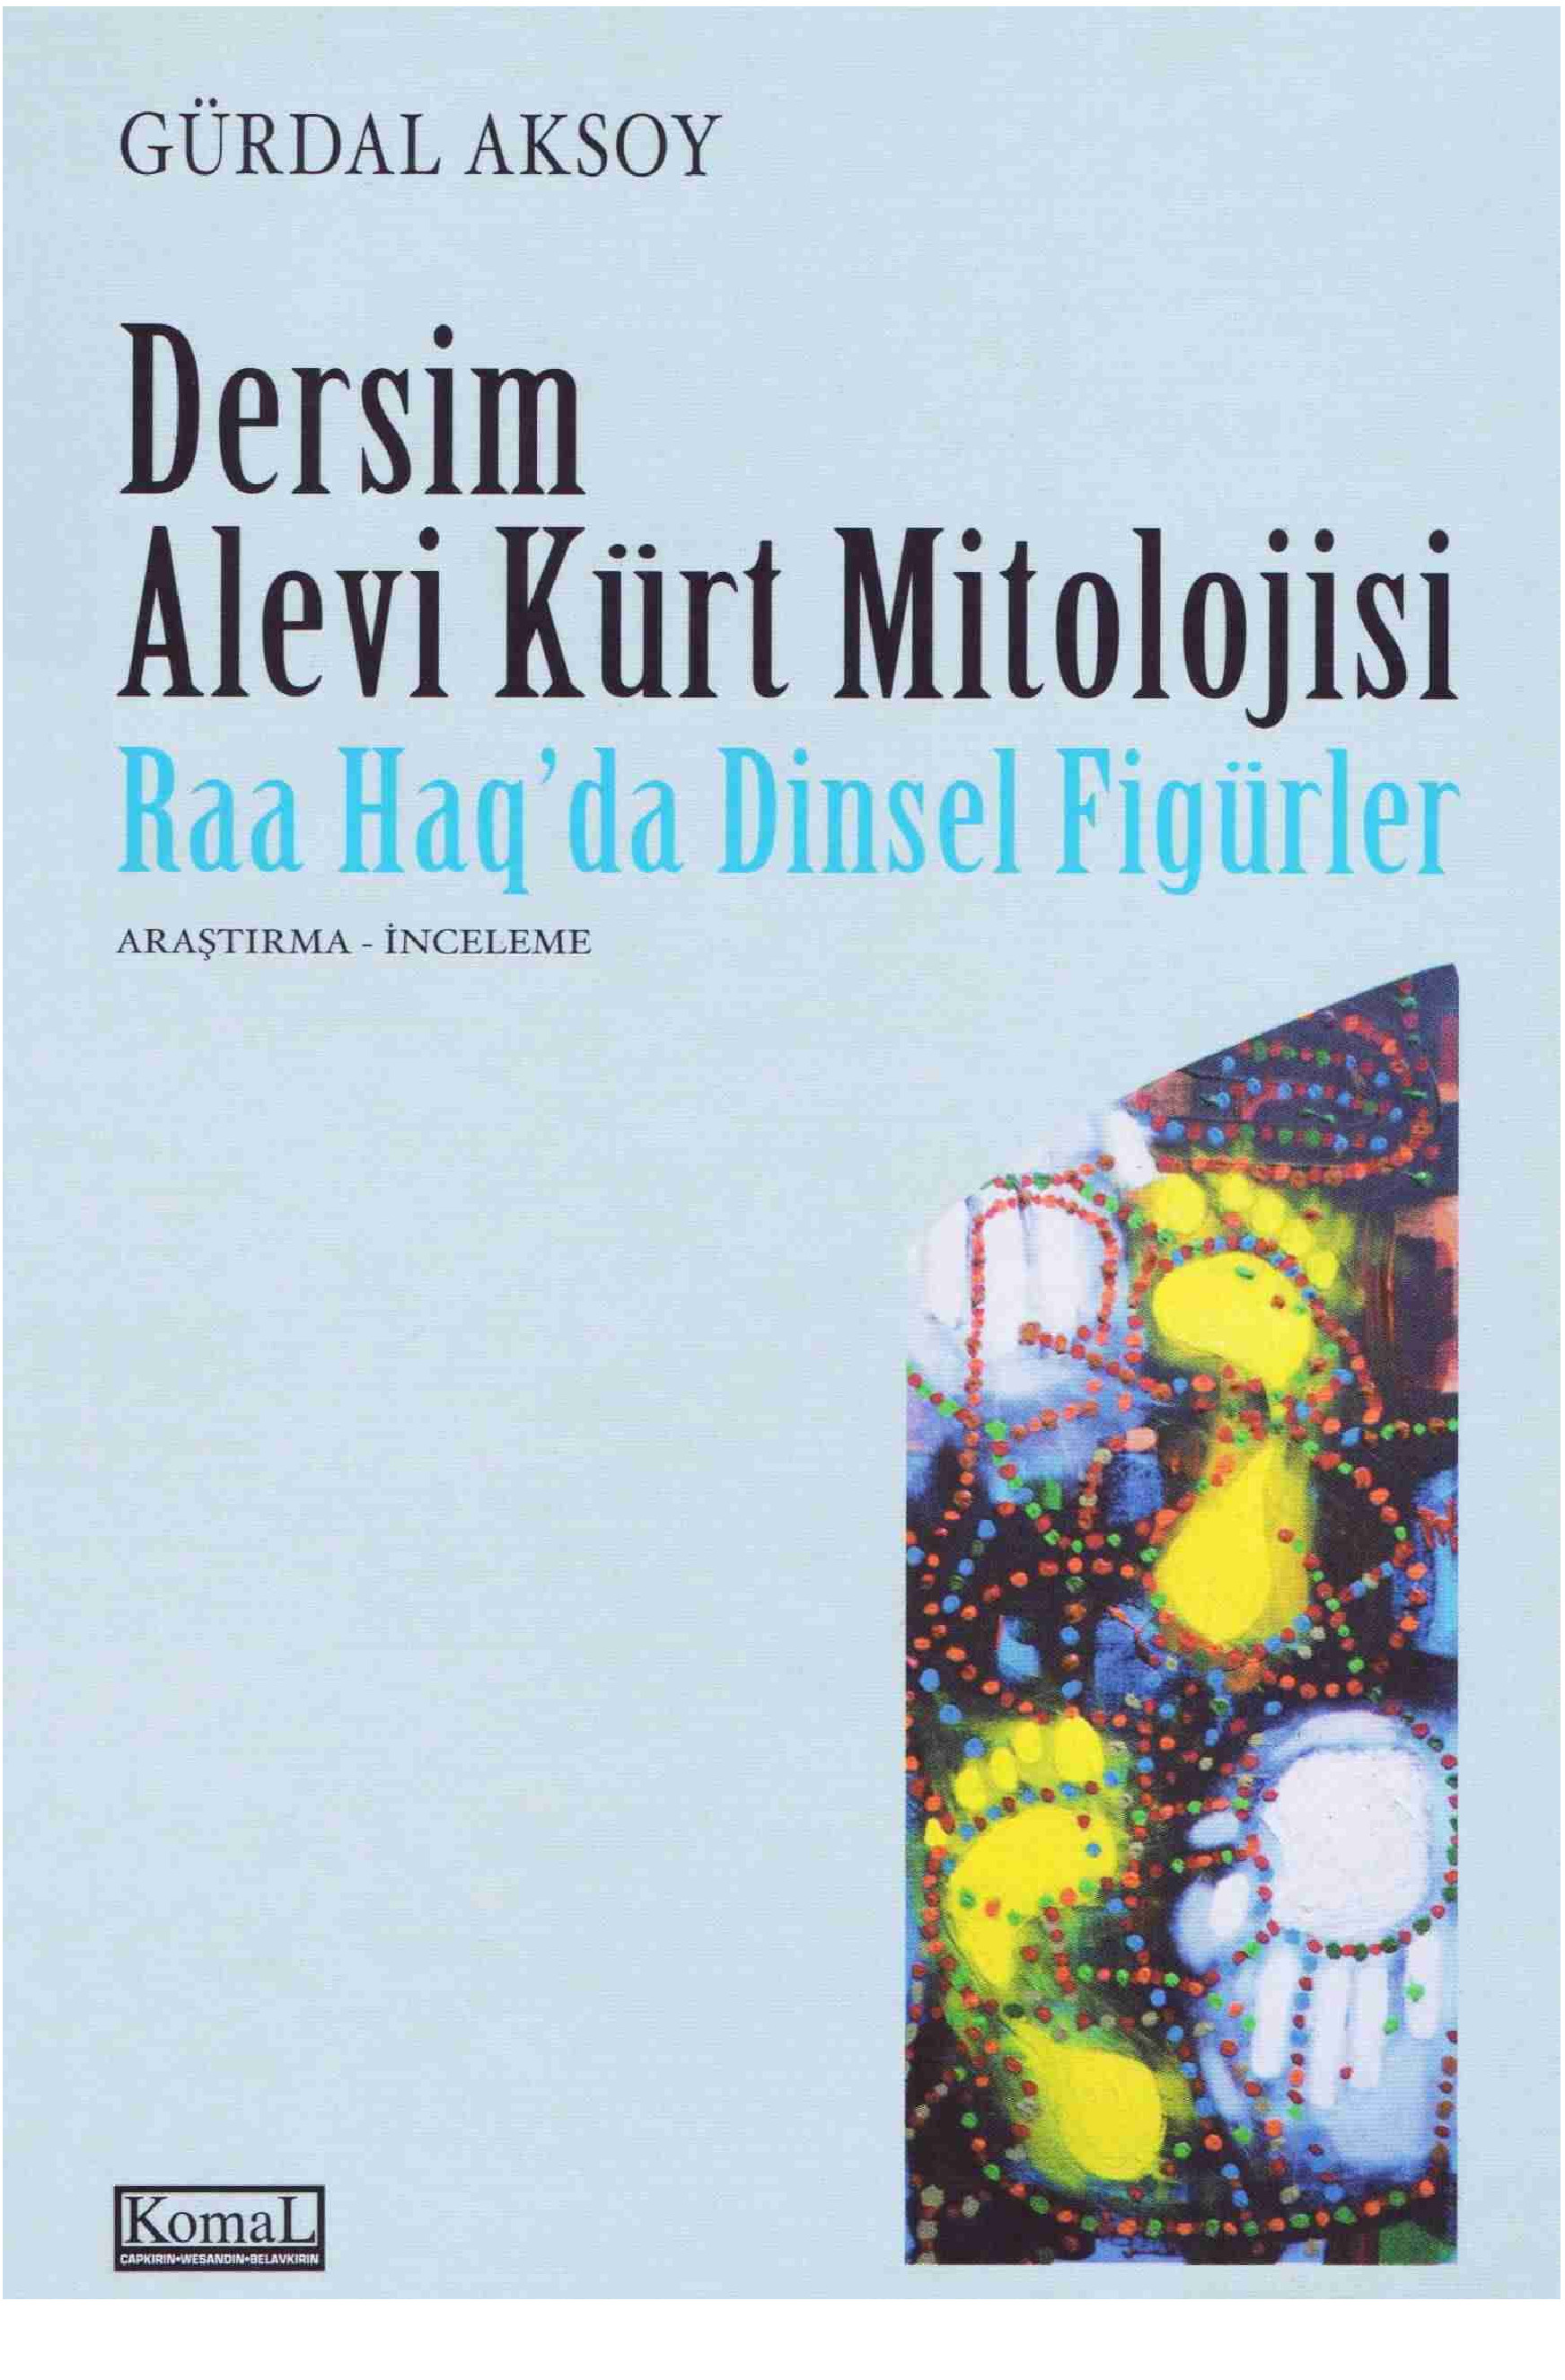 Dersim Alevi Kürt Mitolojisi-Raa Haqda Dinsel Fiqurlar-Gürdal Aksoy-2006-389s